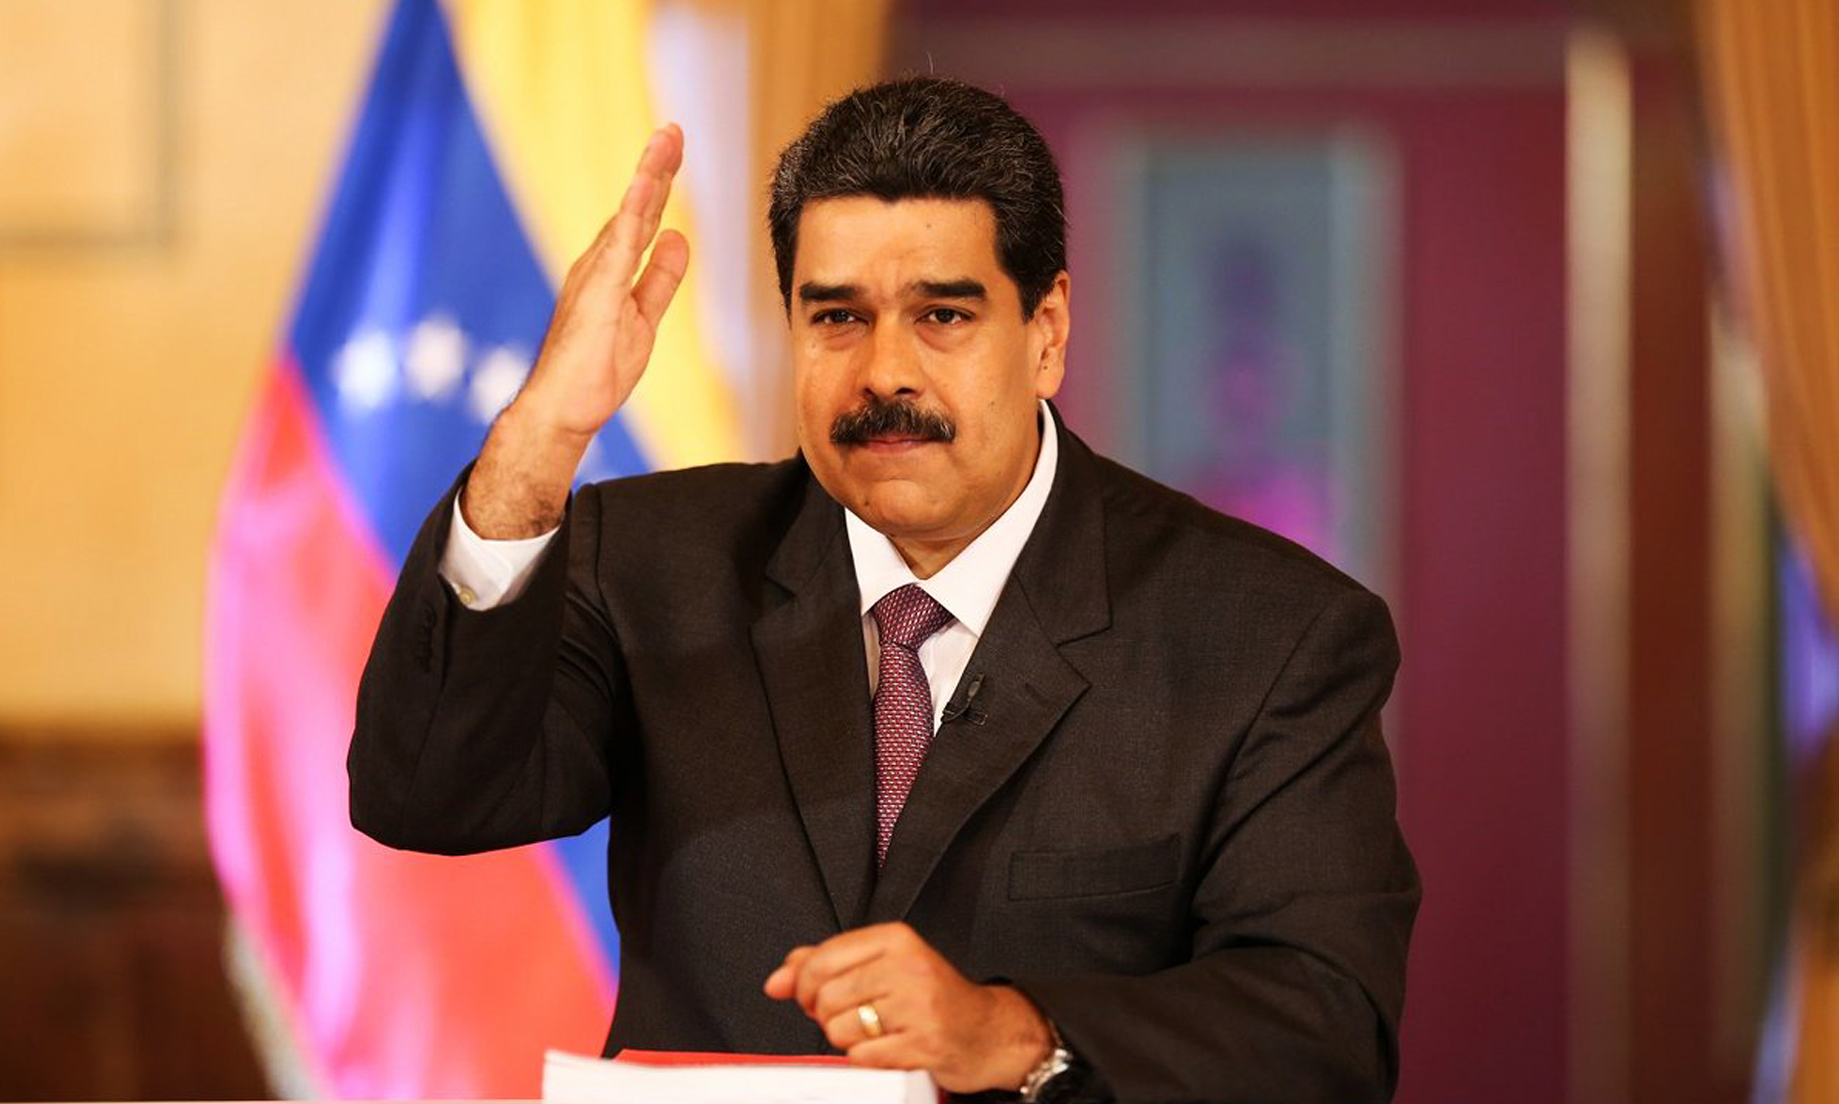 Venezuela to present its case to international bodies, says Maduro